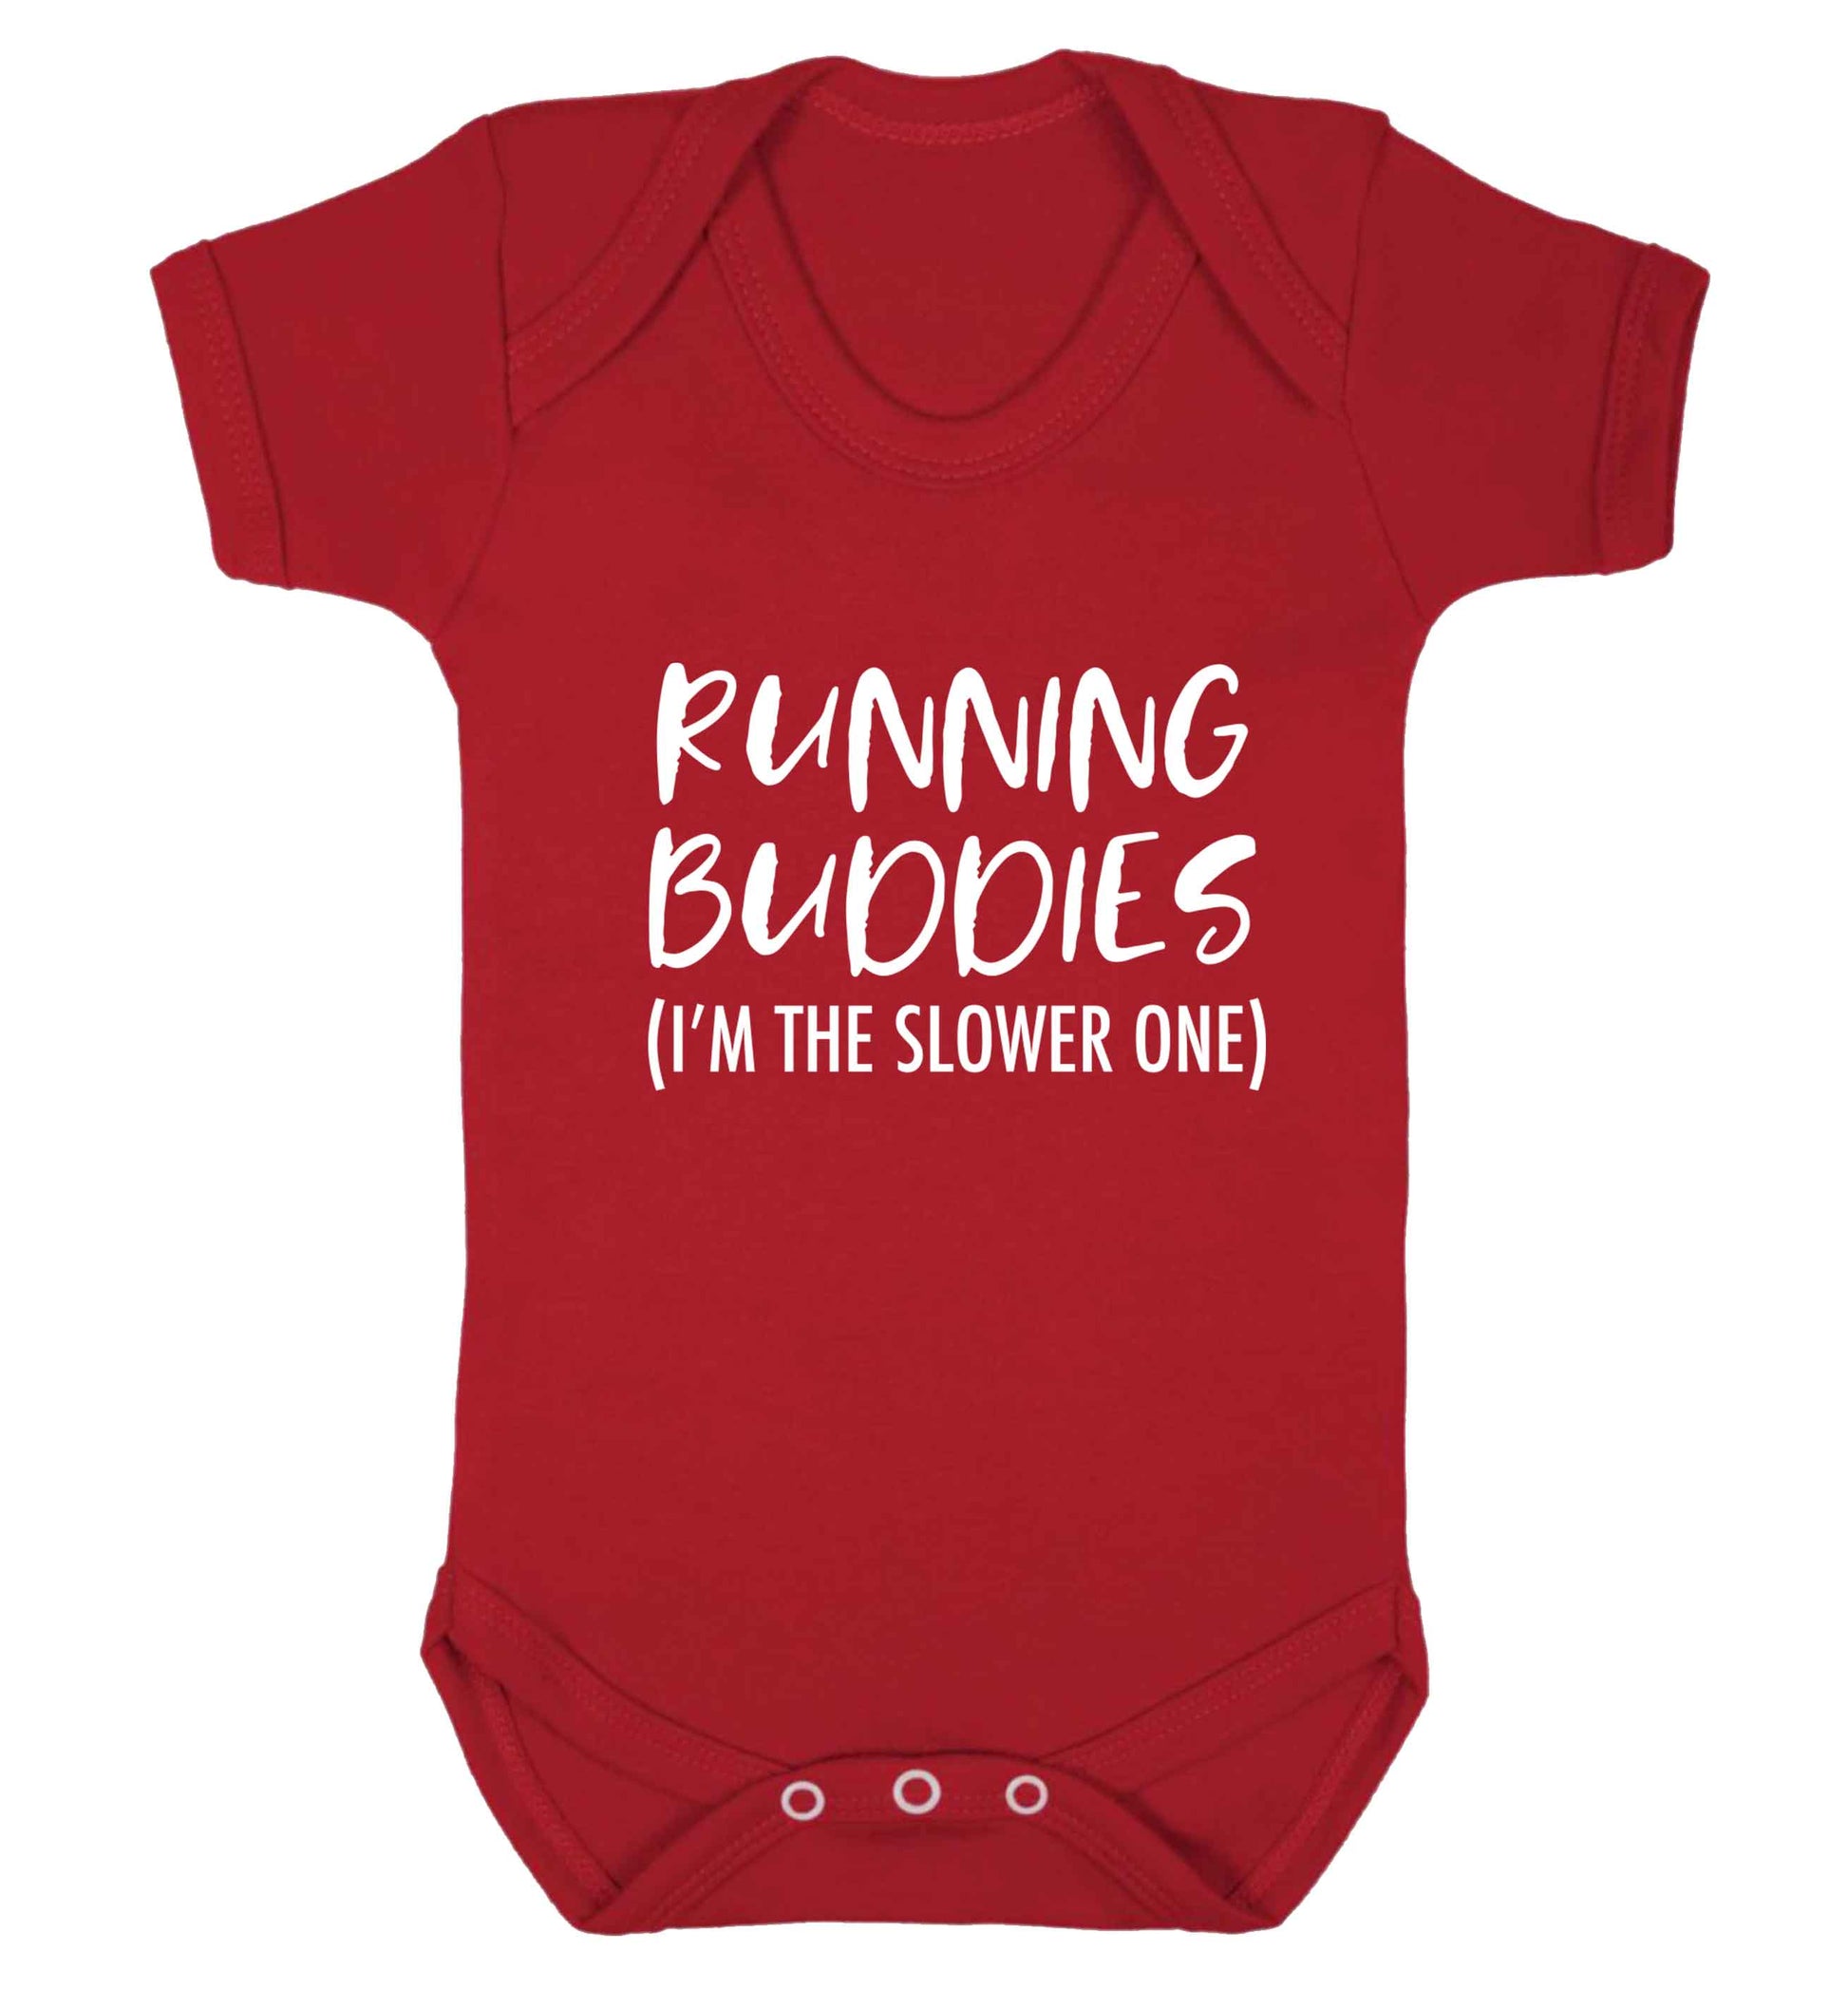 Running buddies (I'm the slower one) baby vest red 18-24 months